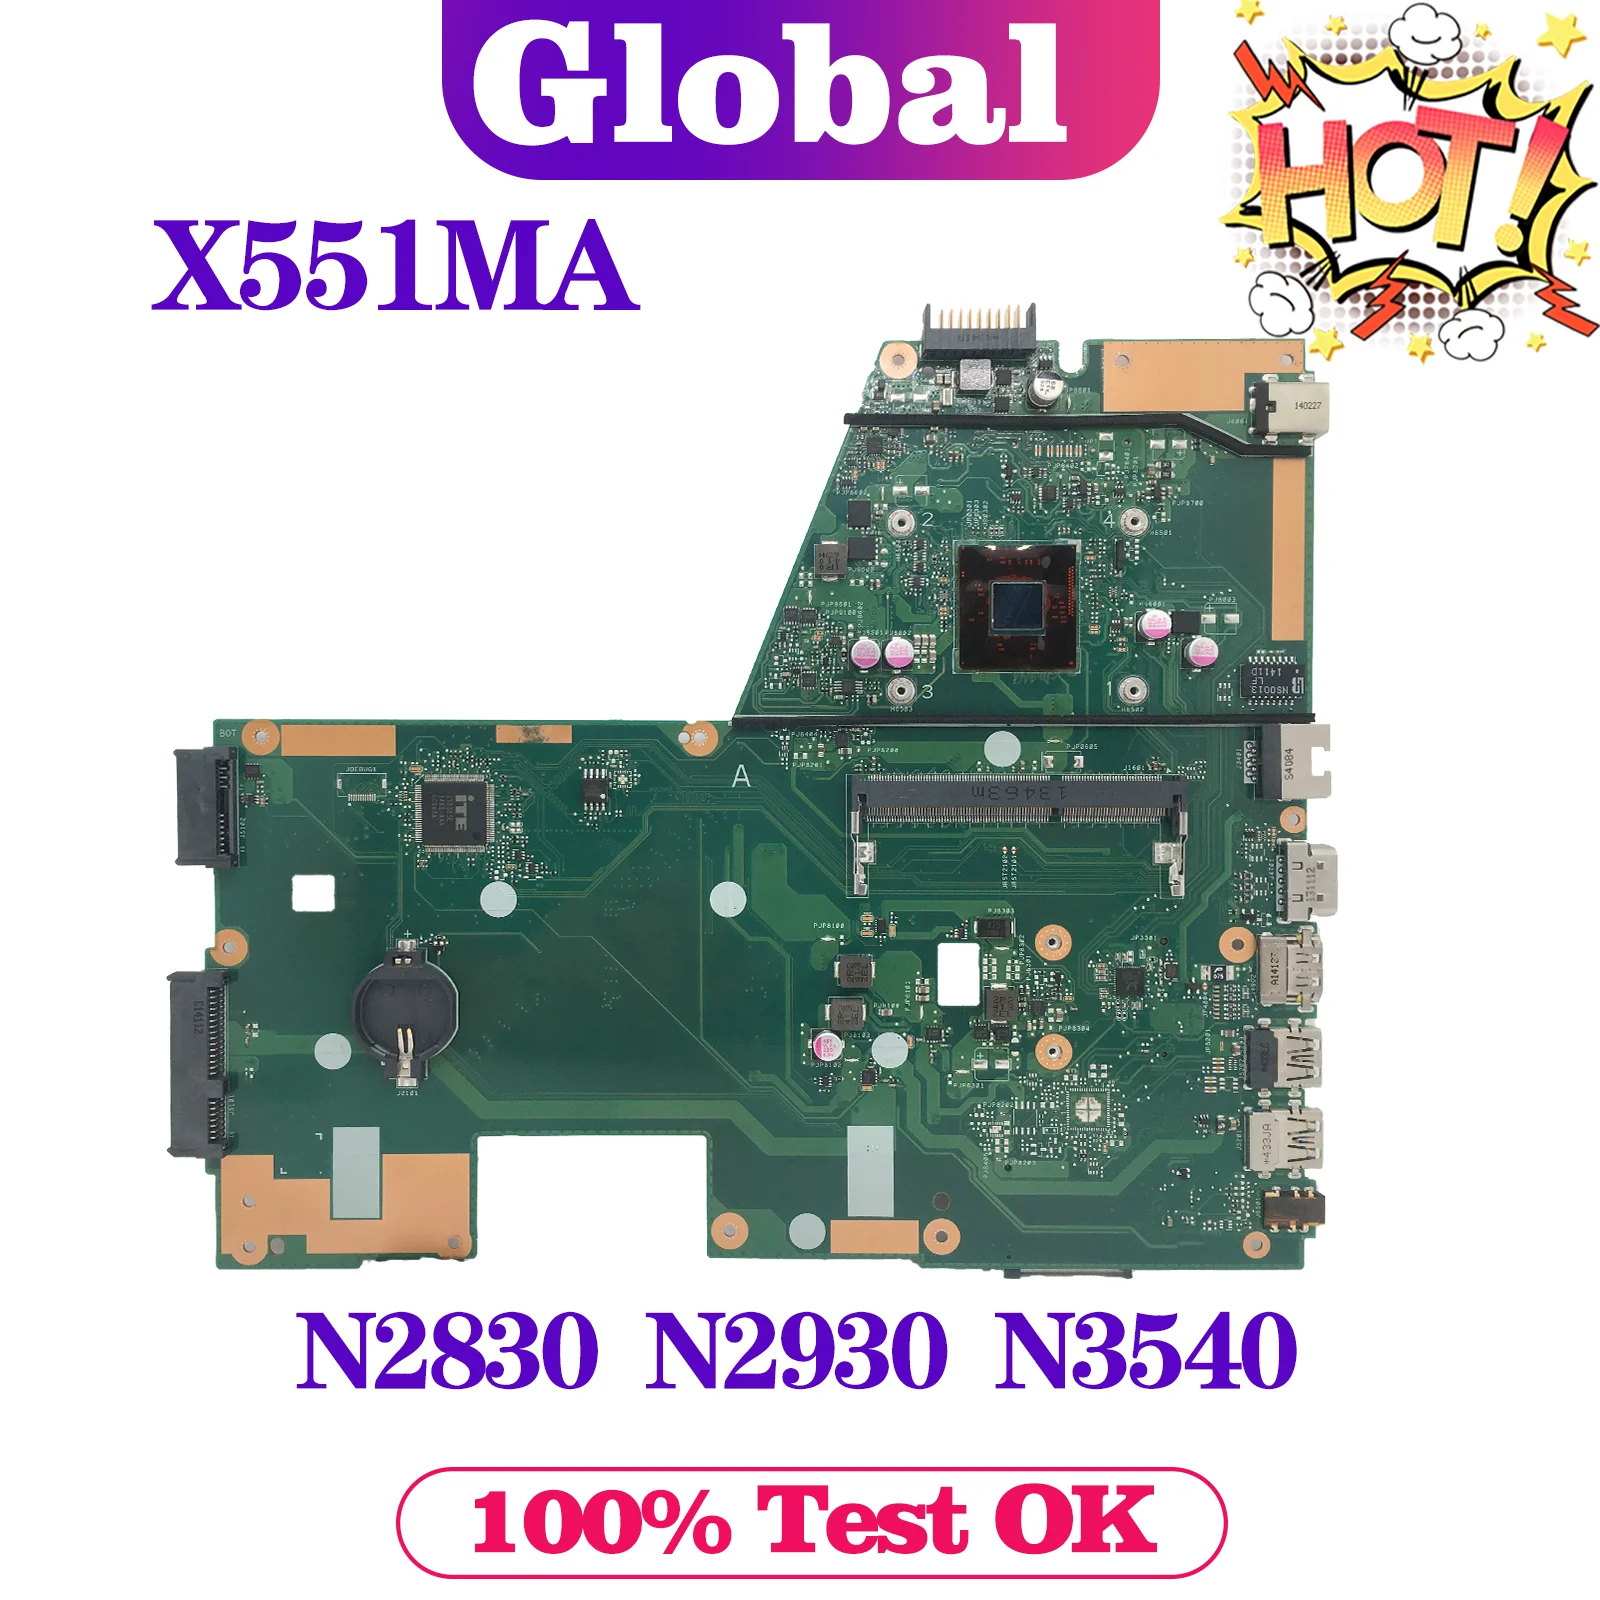 

KEFU X551M Mainboard For ASUS X551MA F551MA D550M Laptop Motherboard N2815/N2830/N2930/N2940/N3540 MAIN BOARD 100% Test OK